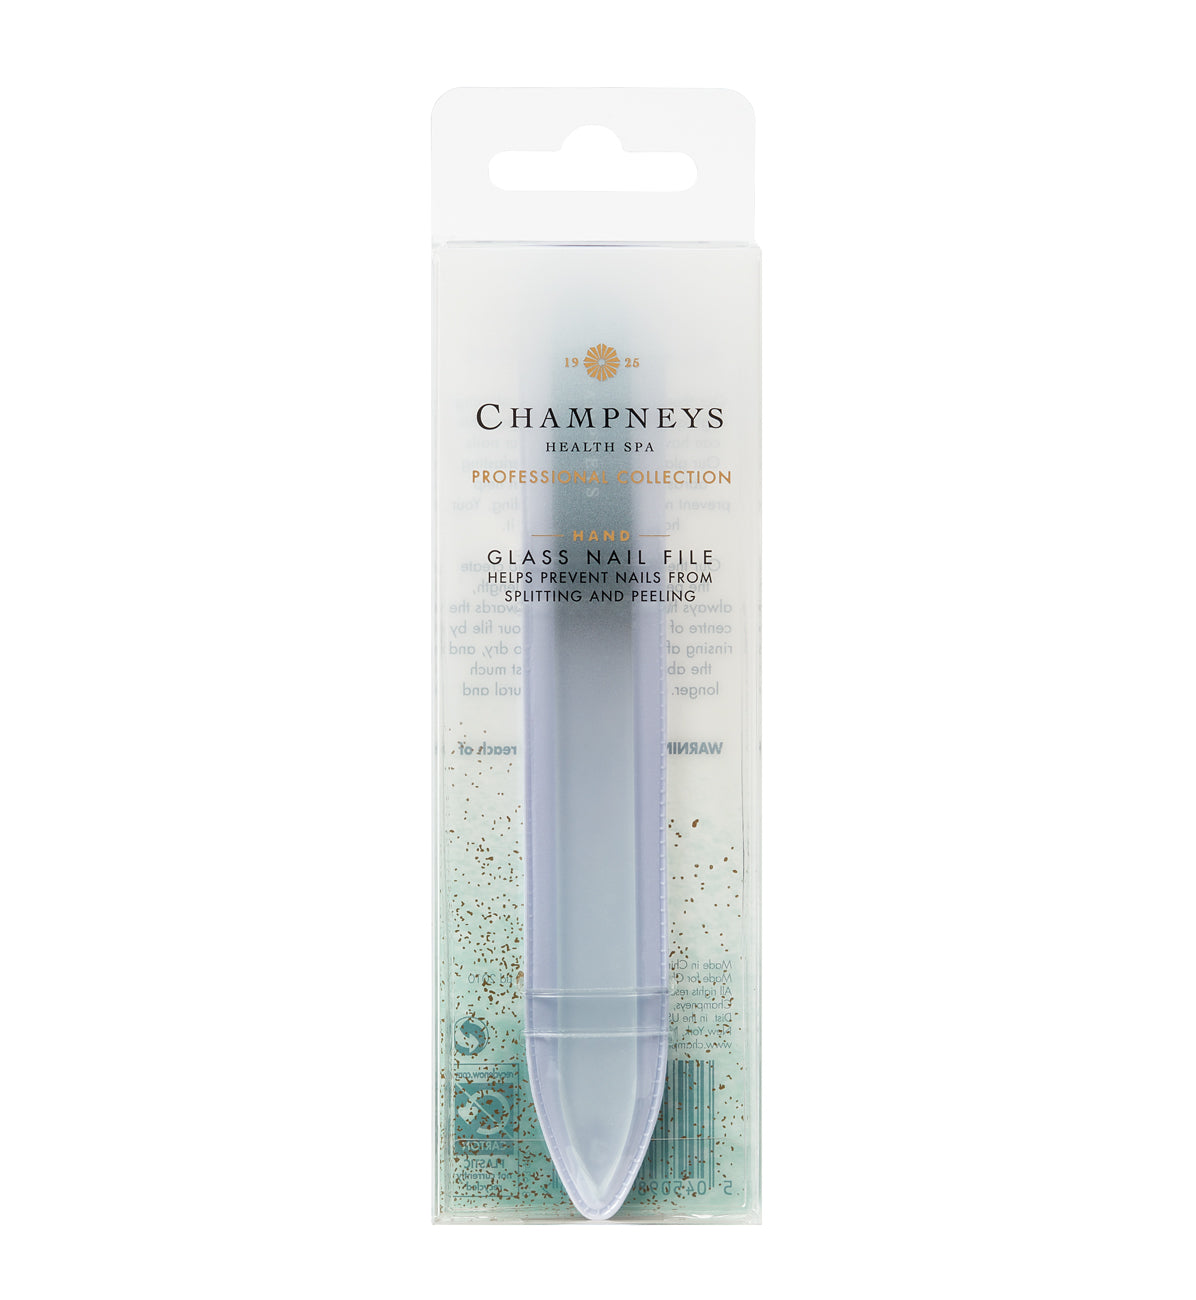 Champneys Glass Nail File